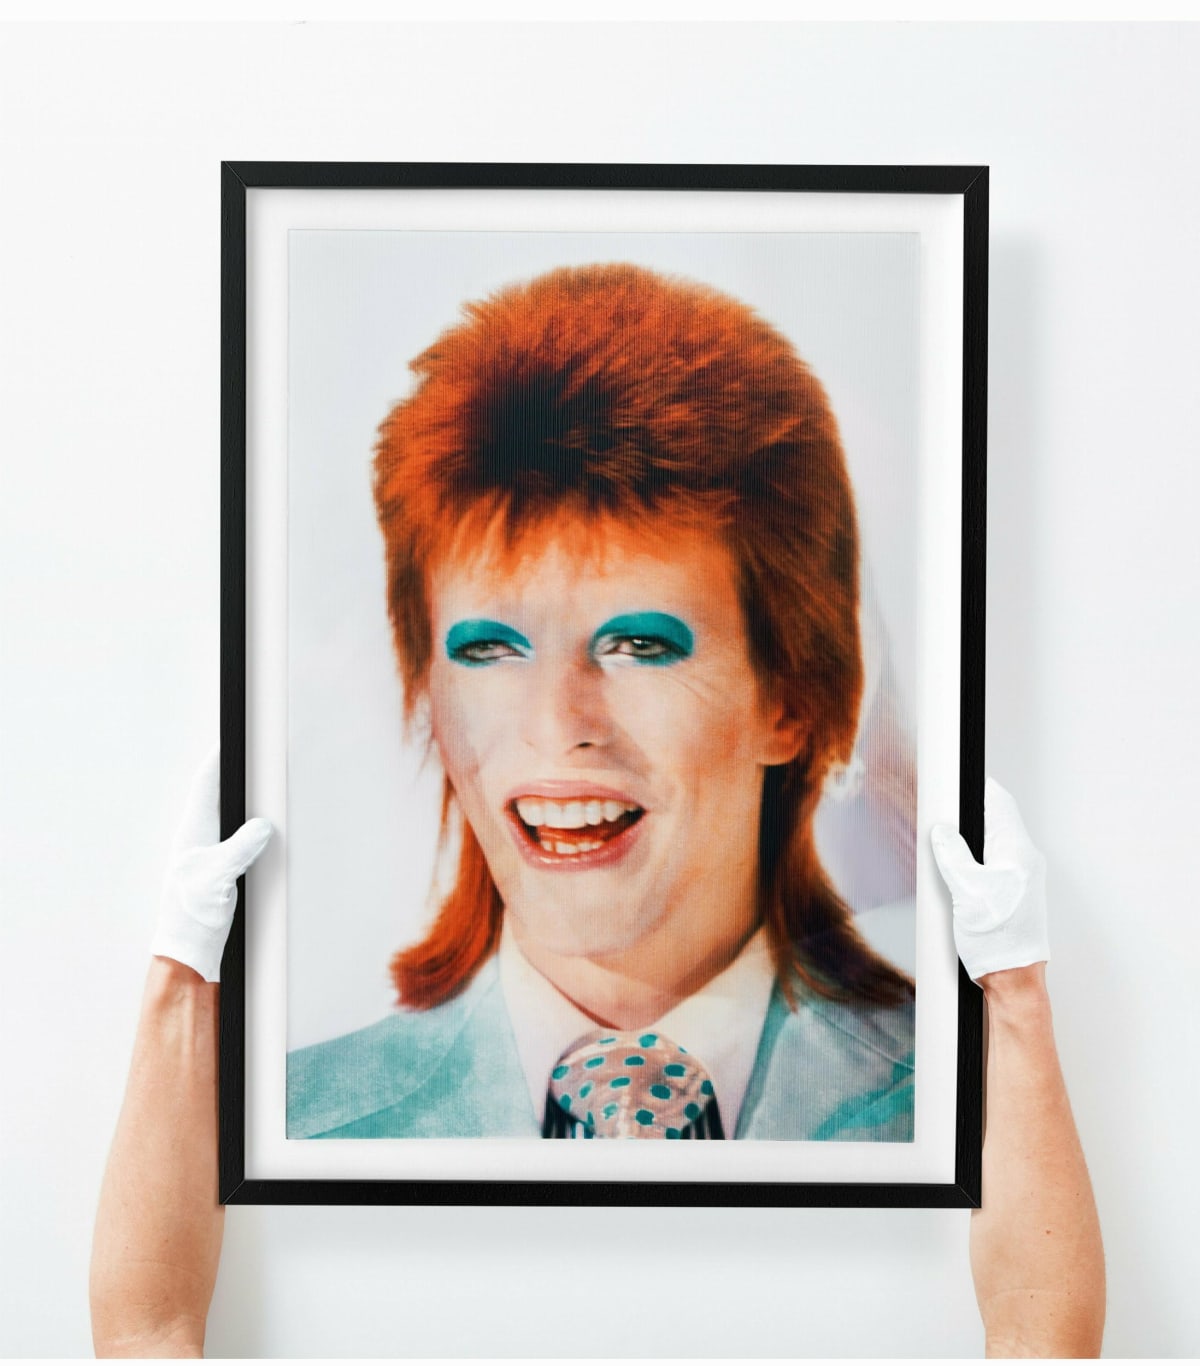 Mick Rock. David Bowie 'Changes' Lenticular